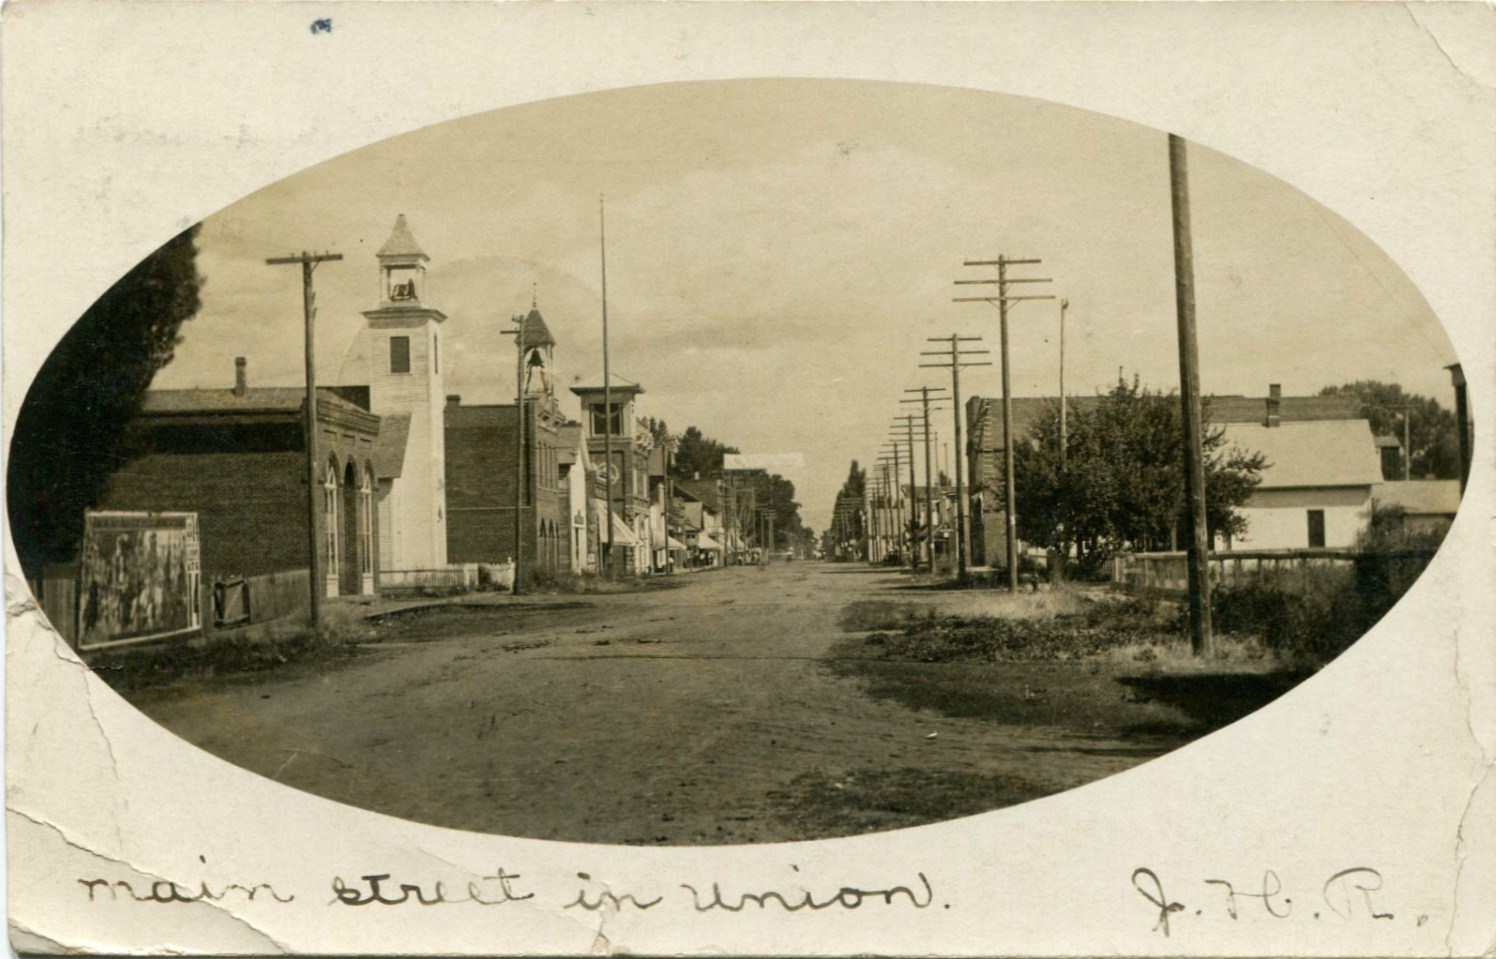 Union, Oregon, circa 1905